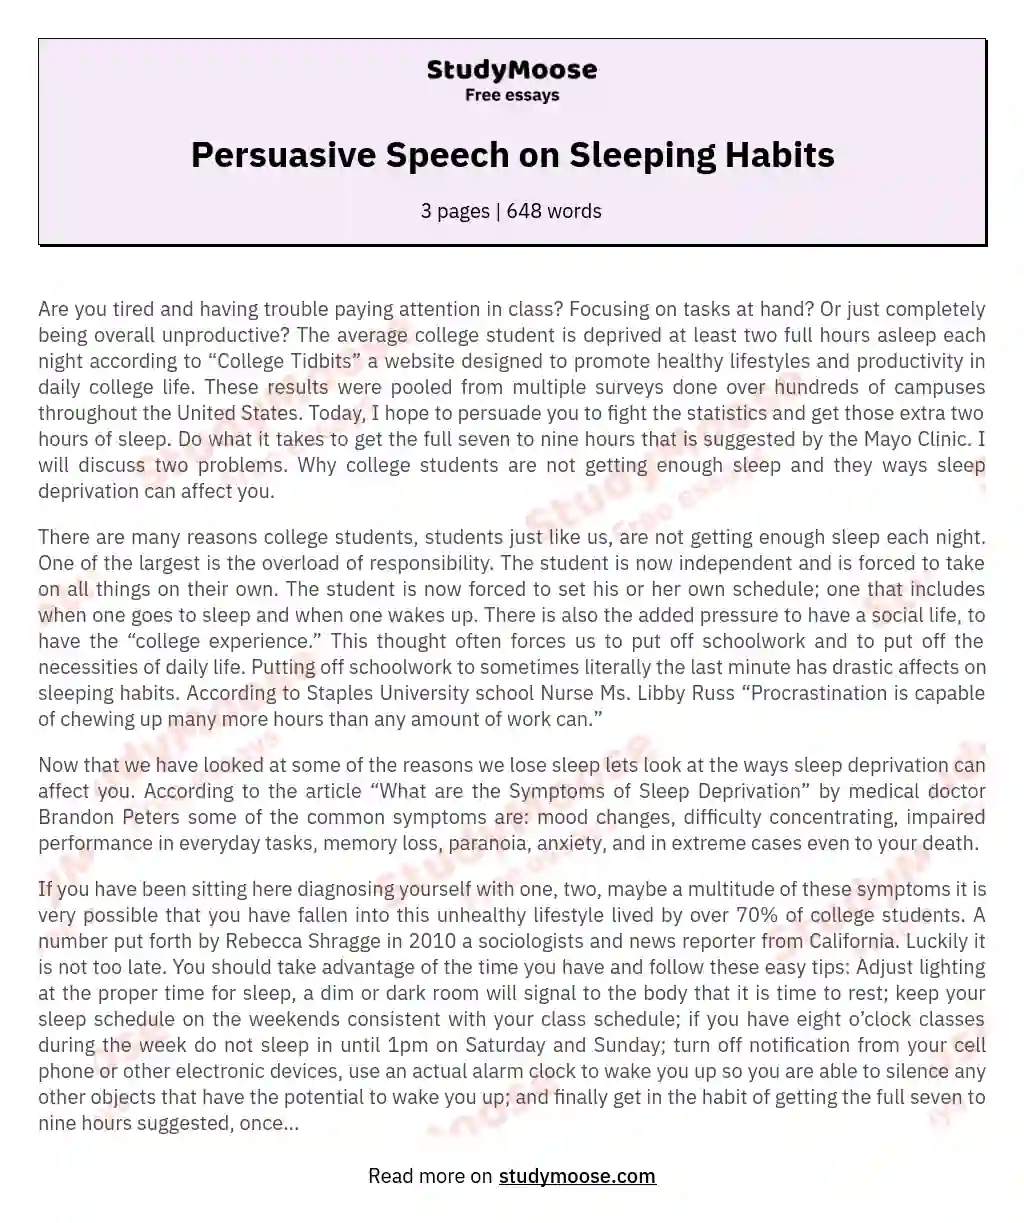 Persuasive Speech on Sleeping Habits